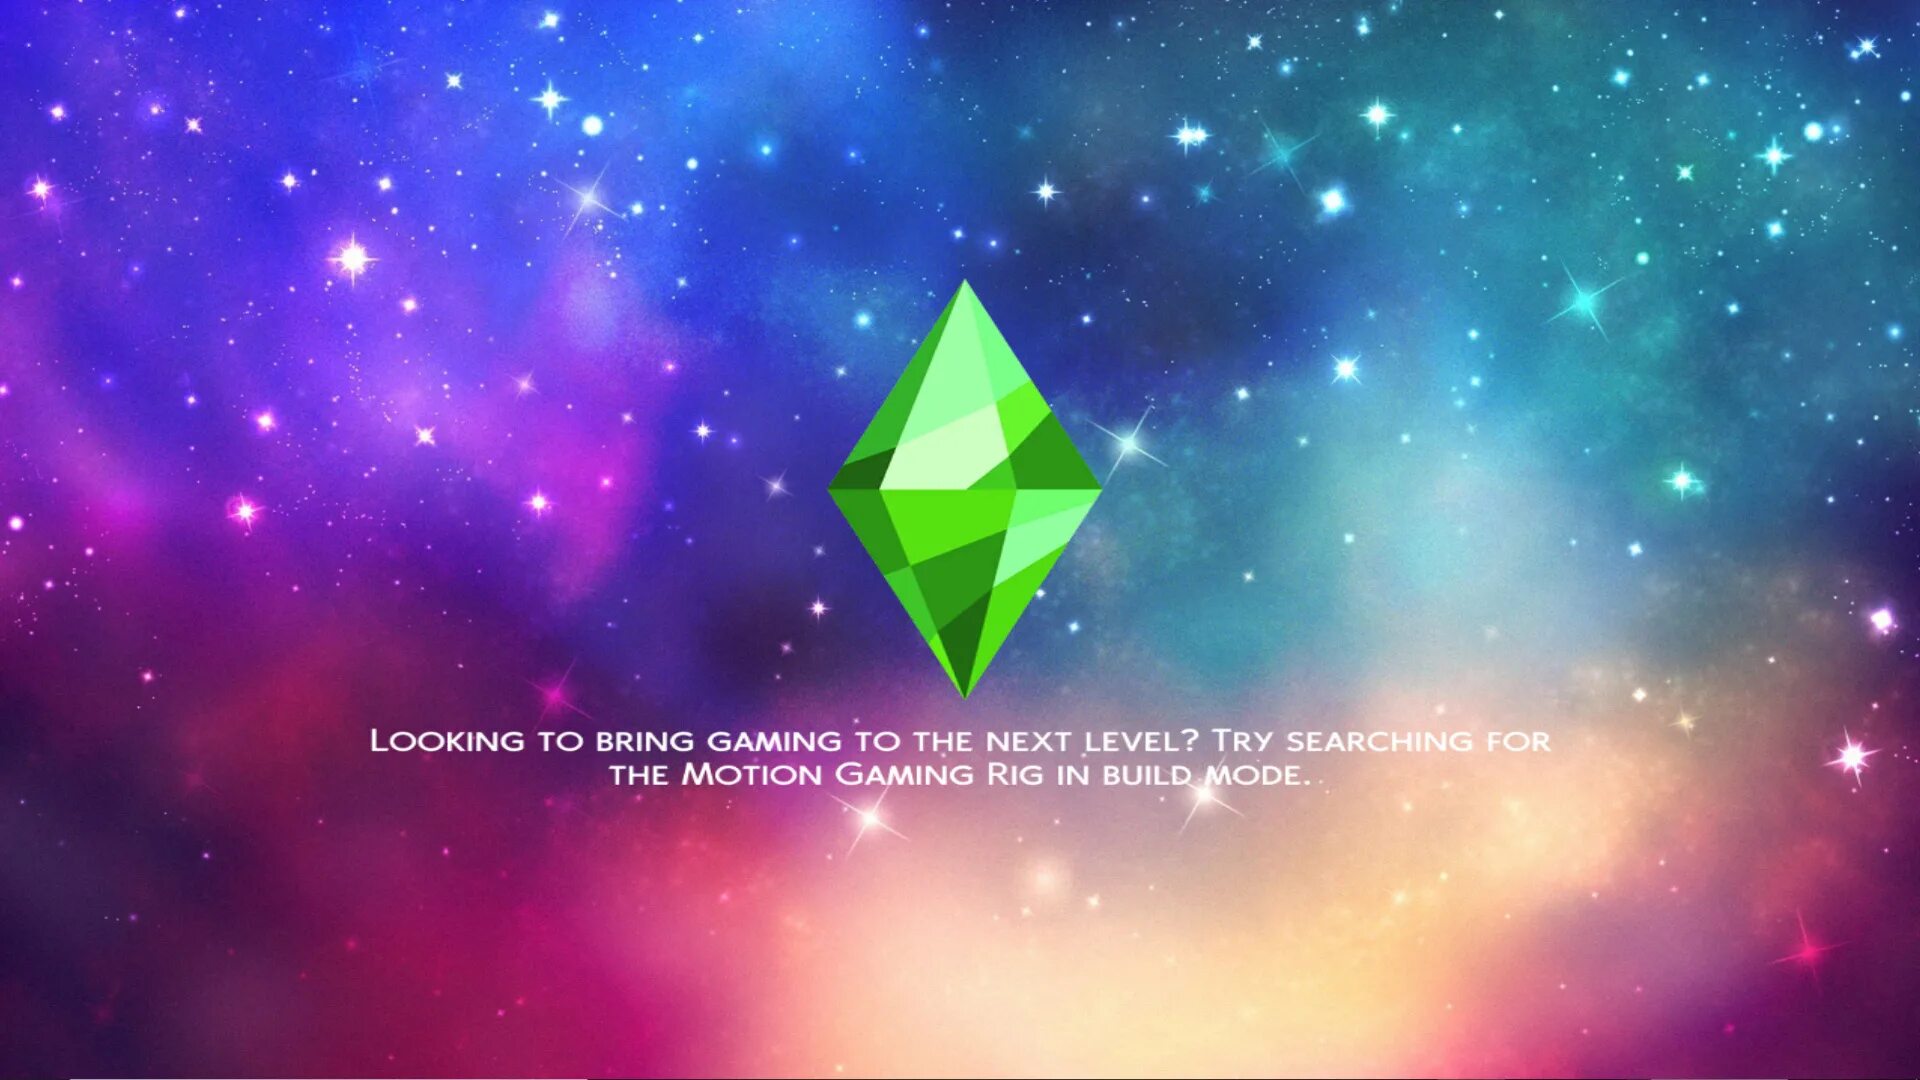 Sims 4 loading screen. Симс 4 фон загрузки. Симс 4 экран. Симс 4 экран загрузки.